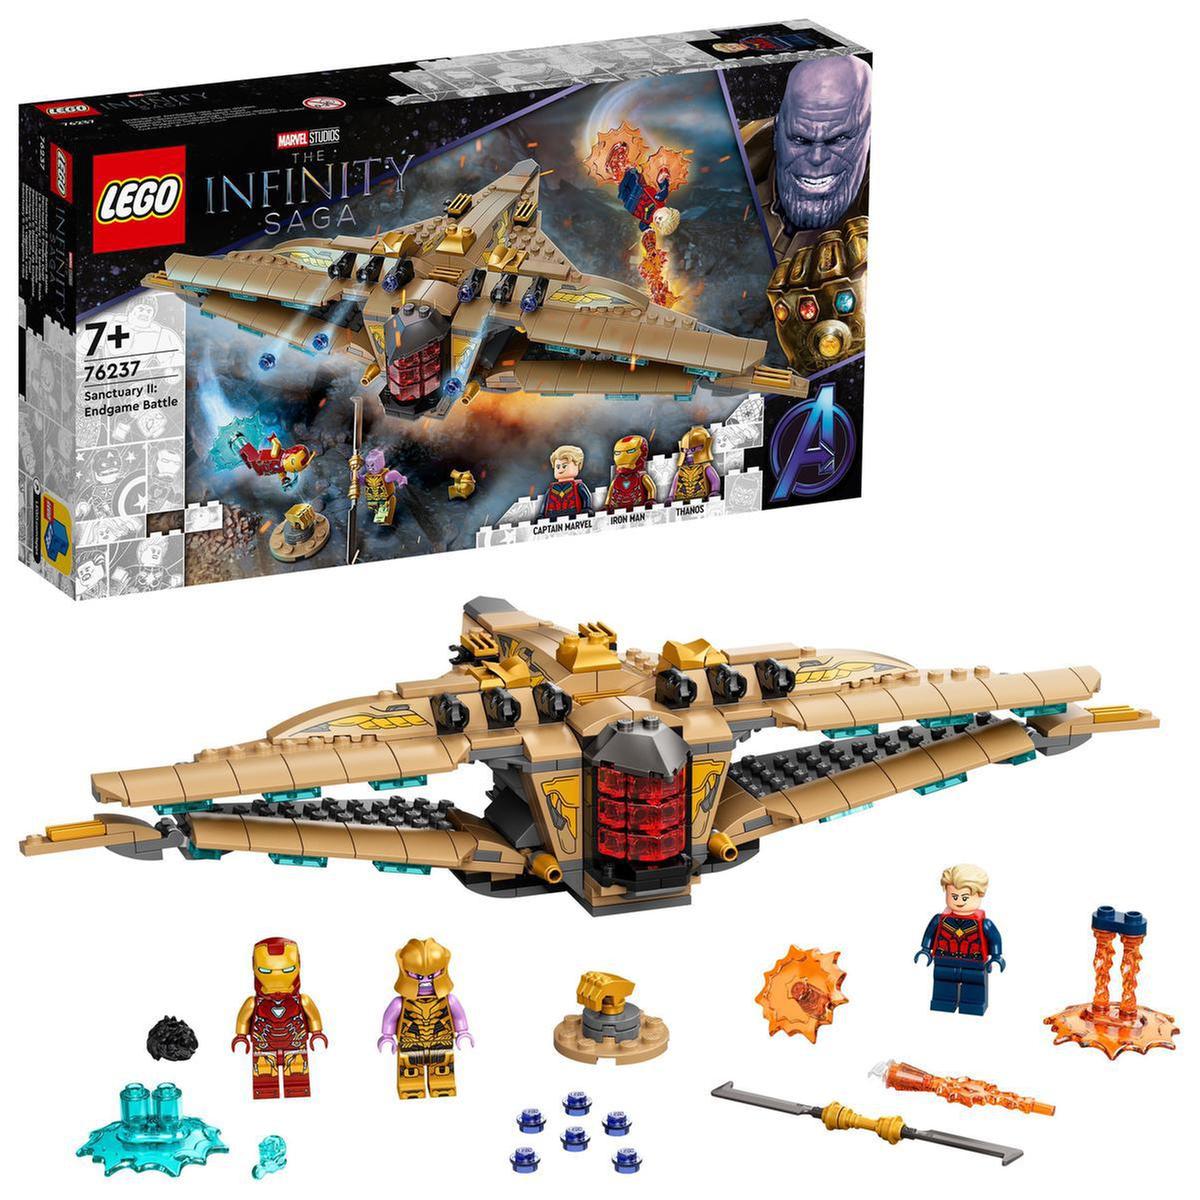 LEGO Marvel Los Vengadores - Santuario II: Batalla de Endgame - 76237 |  Catálogo Navidad | Toys"R"Us España